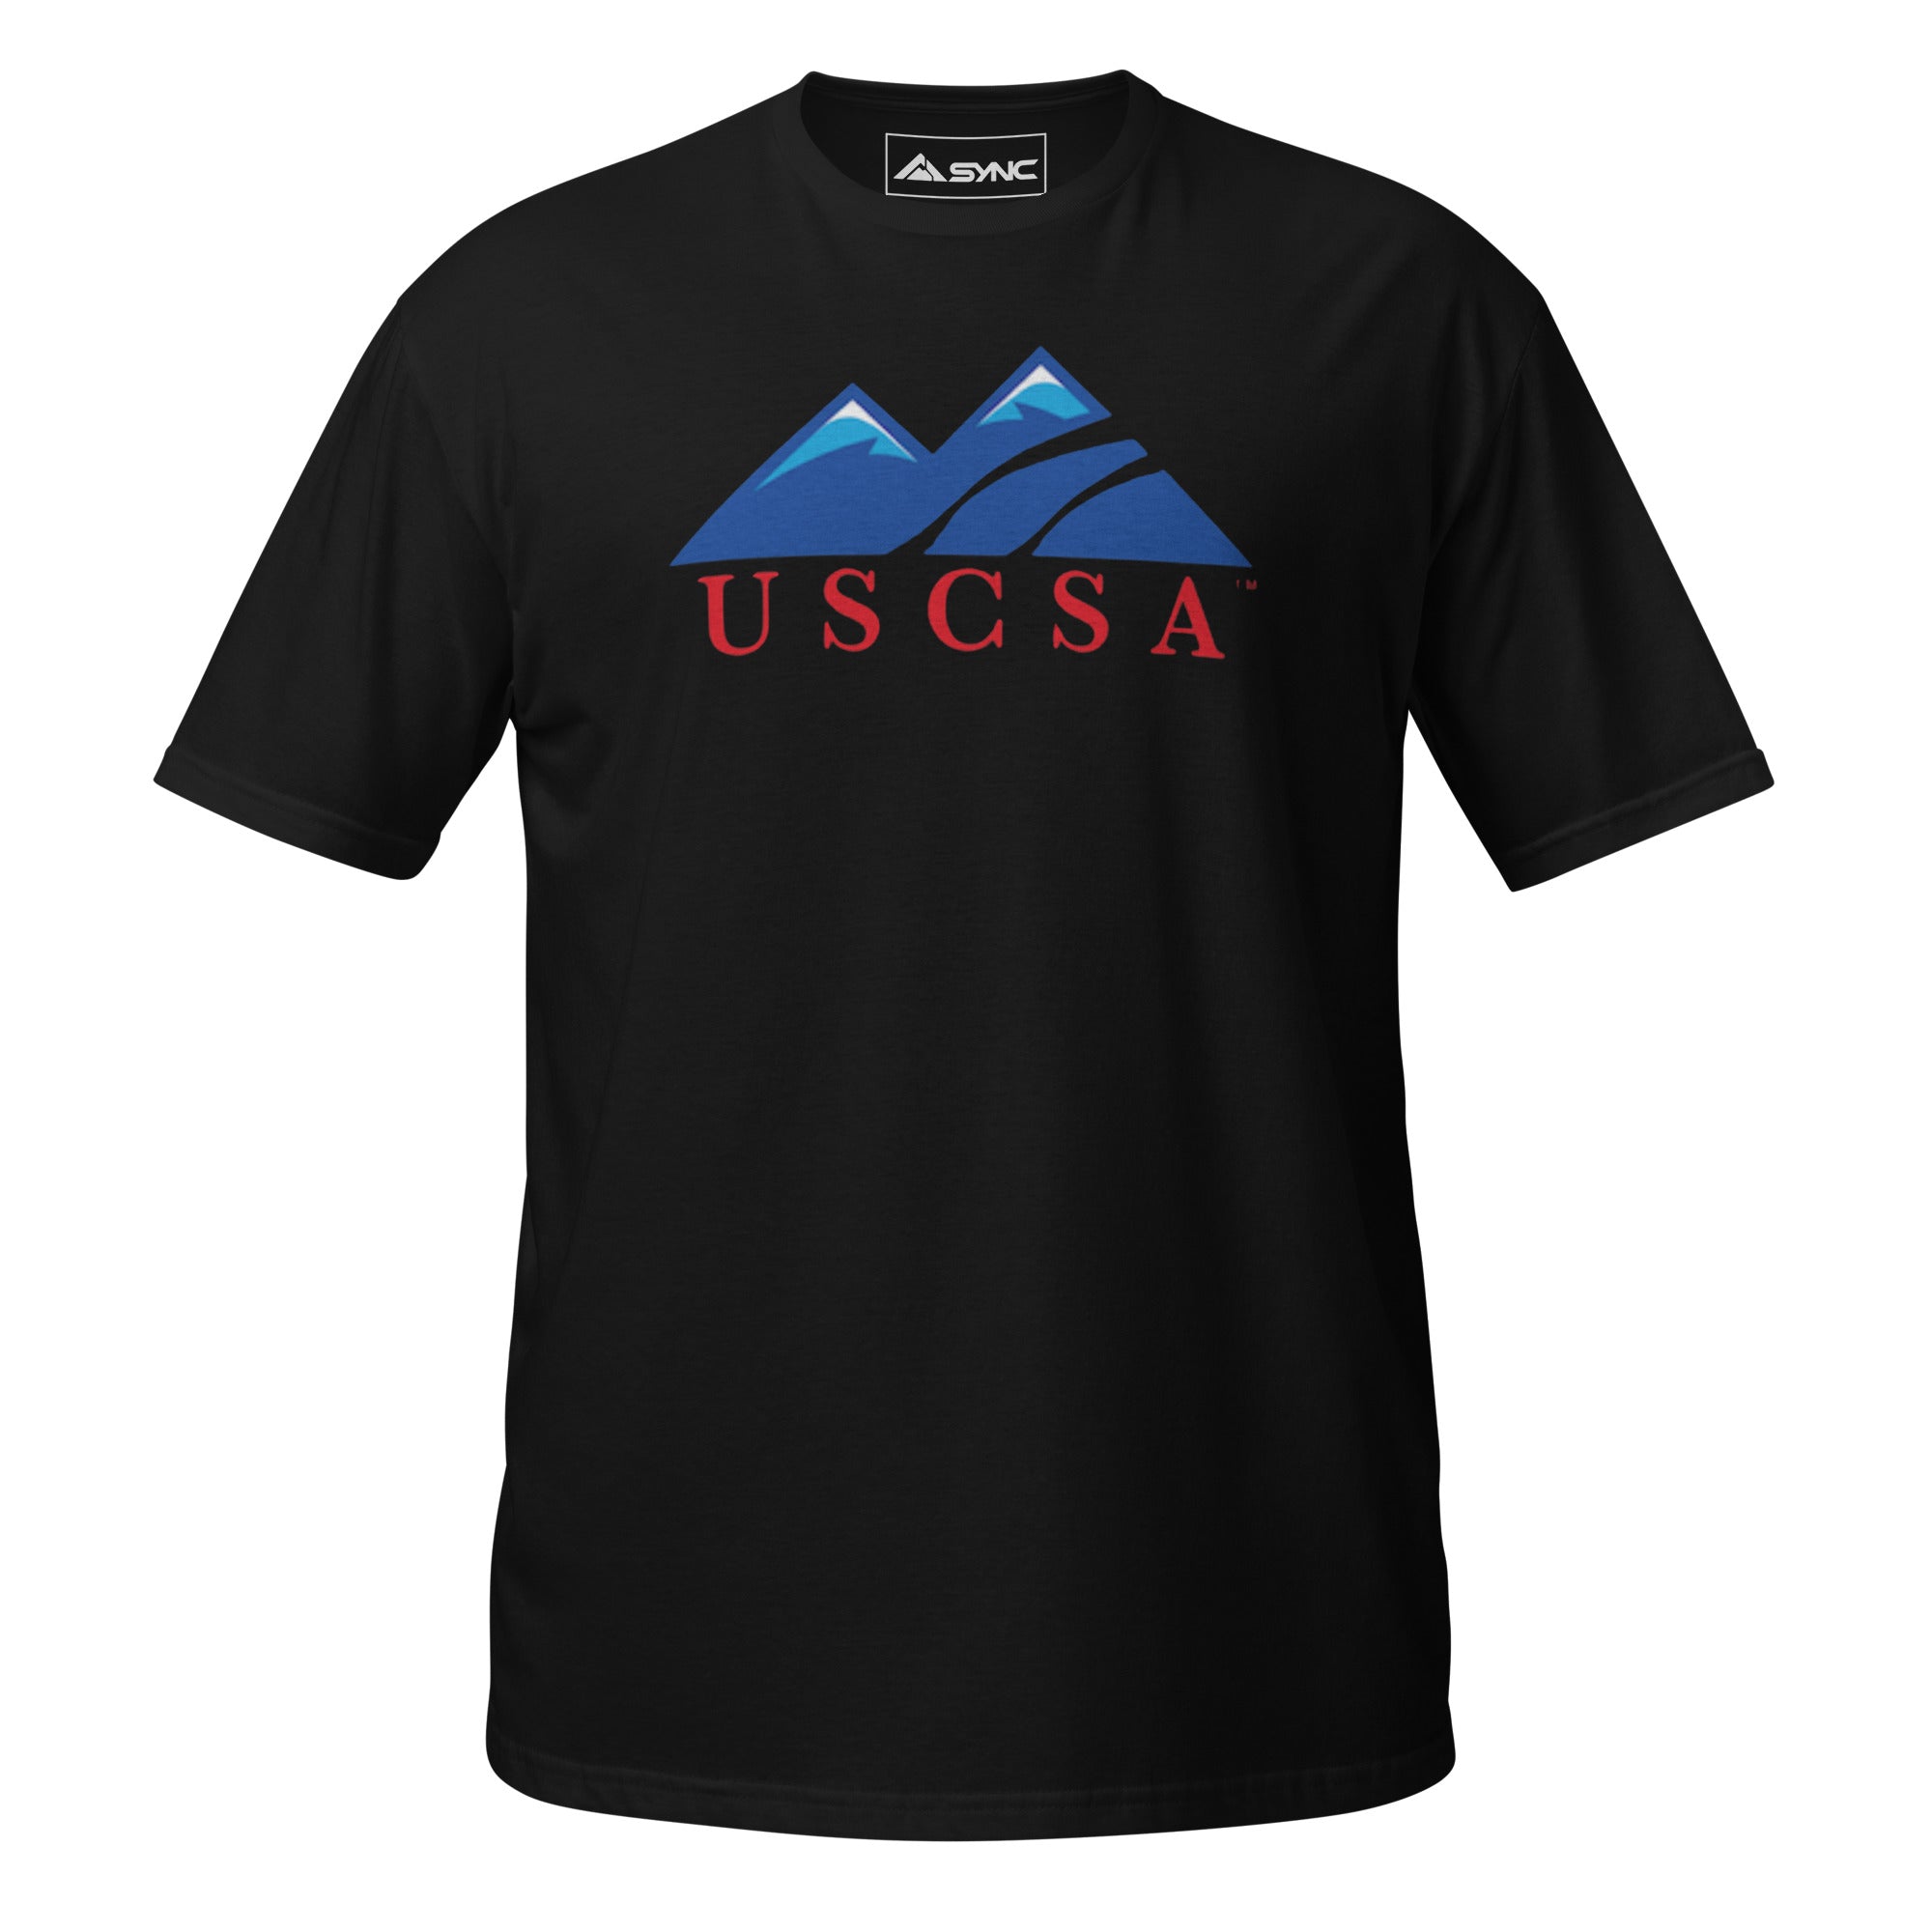 Adult Cotton T-Shirt - USCSA